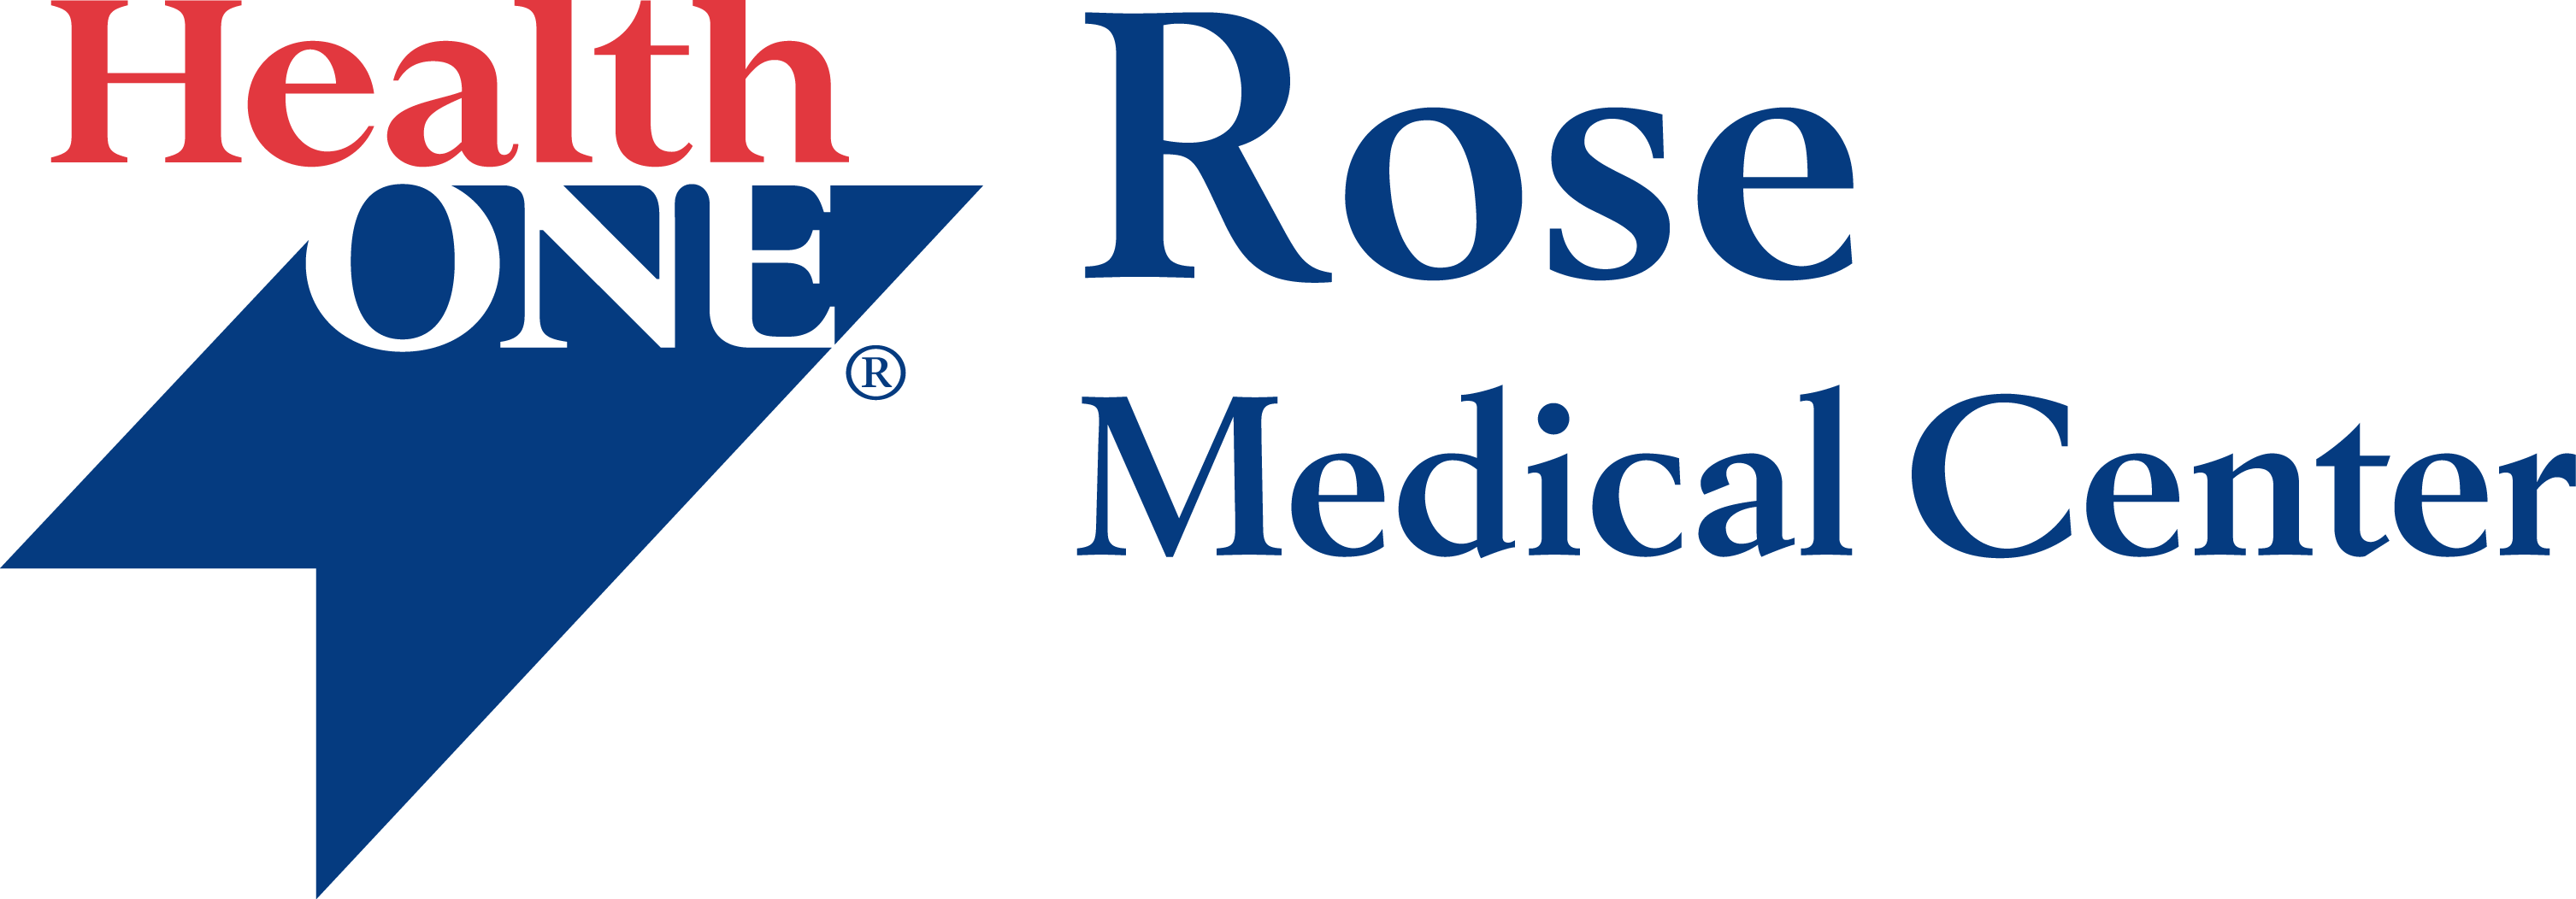 Rose Medical Center Company Logo